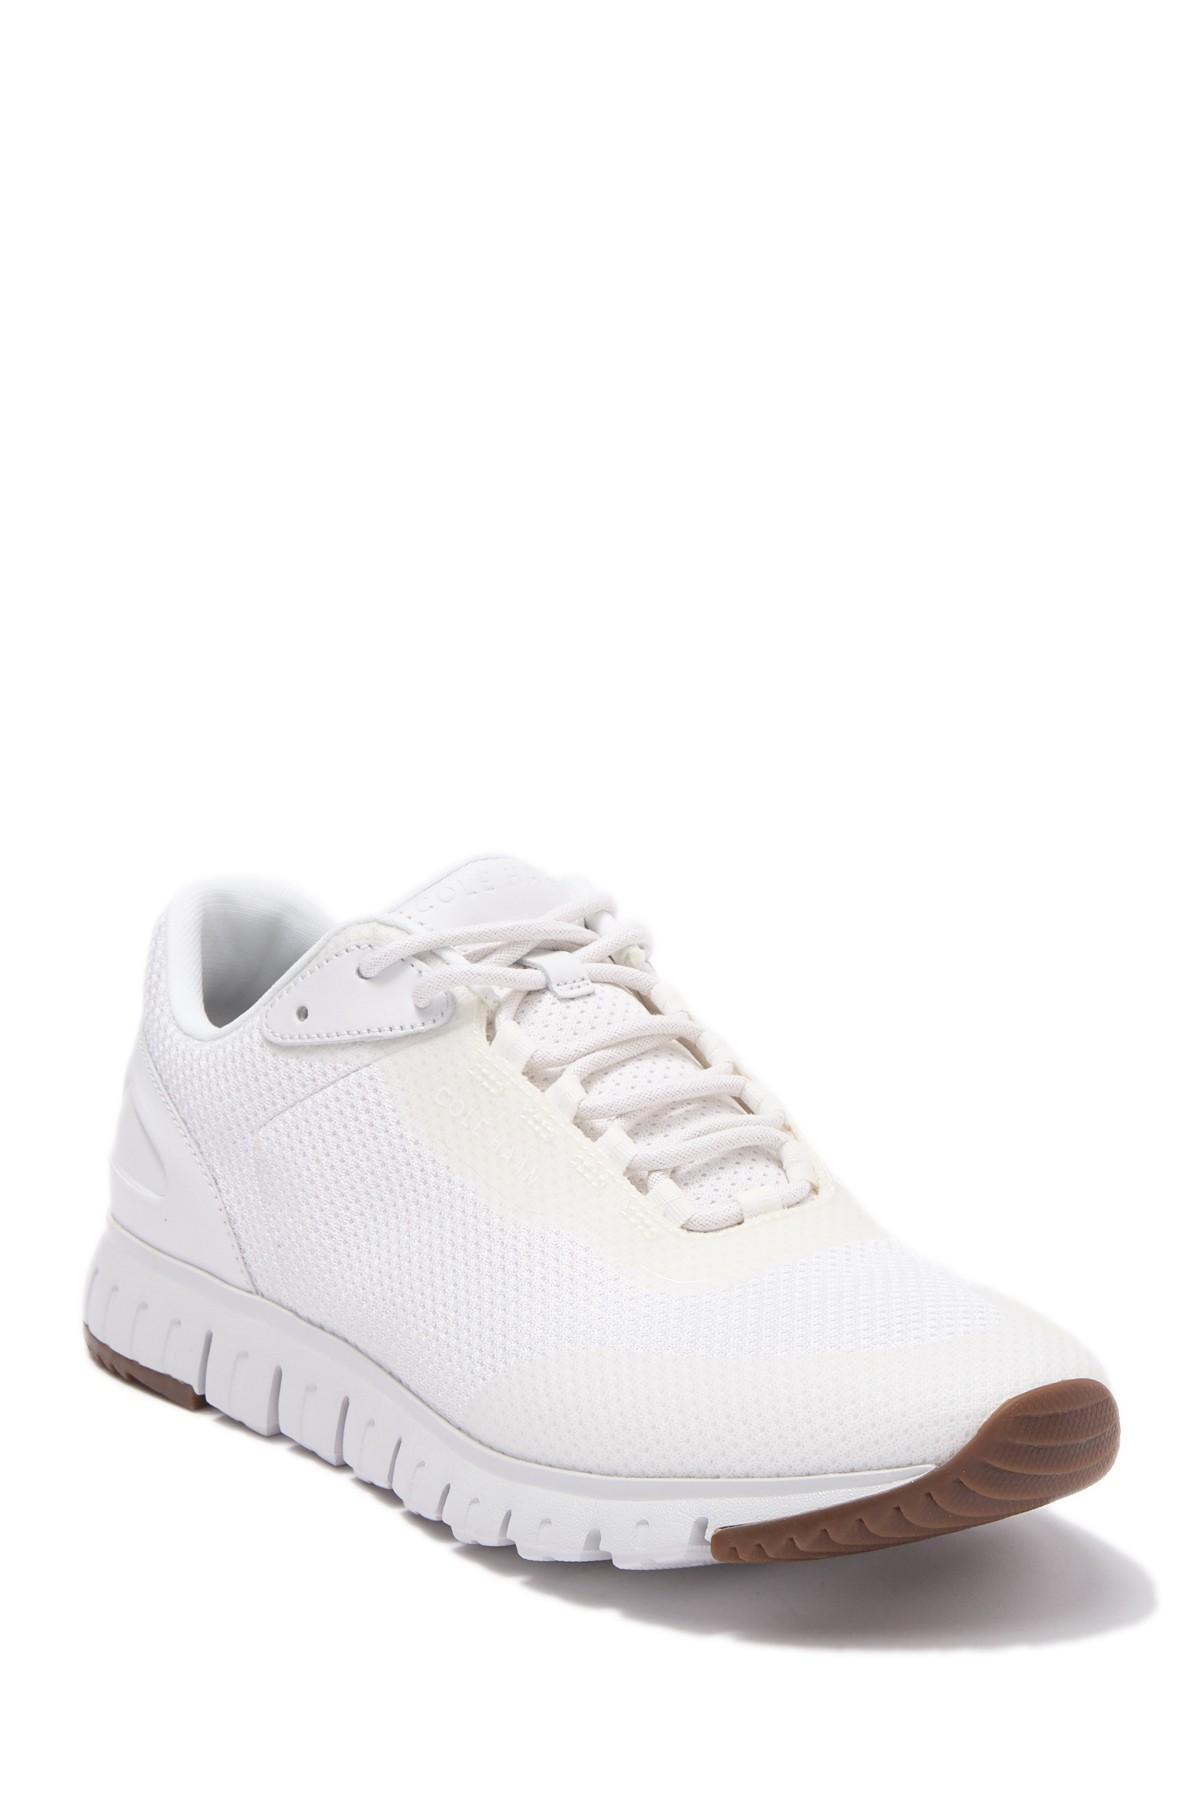 Cole Haan Grandsport Flex Sneaker in White for Men | Lyst